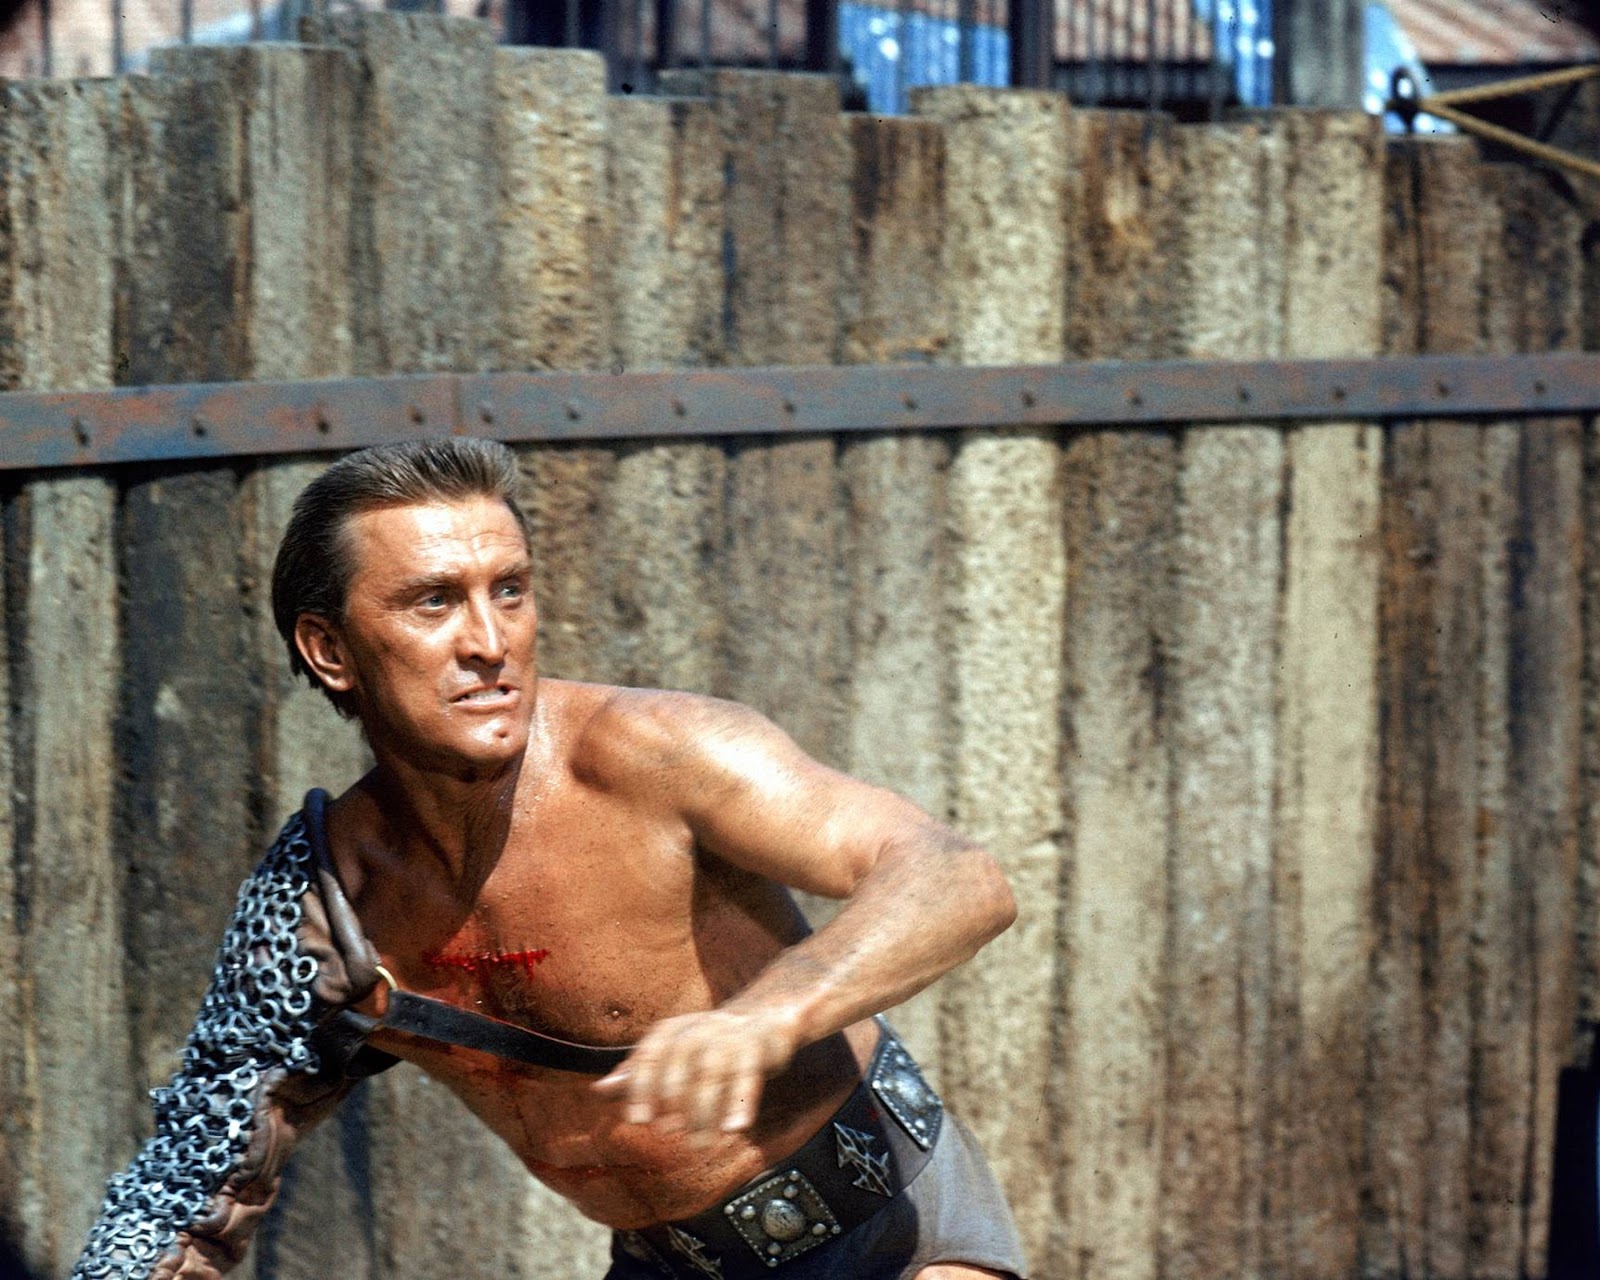 Kirk Douglas in dem Film "Spartacus" 1960. | Quelle: Getty Images